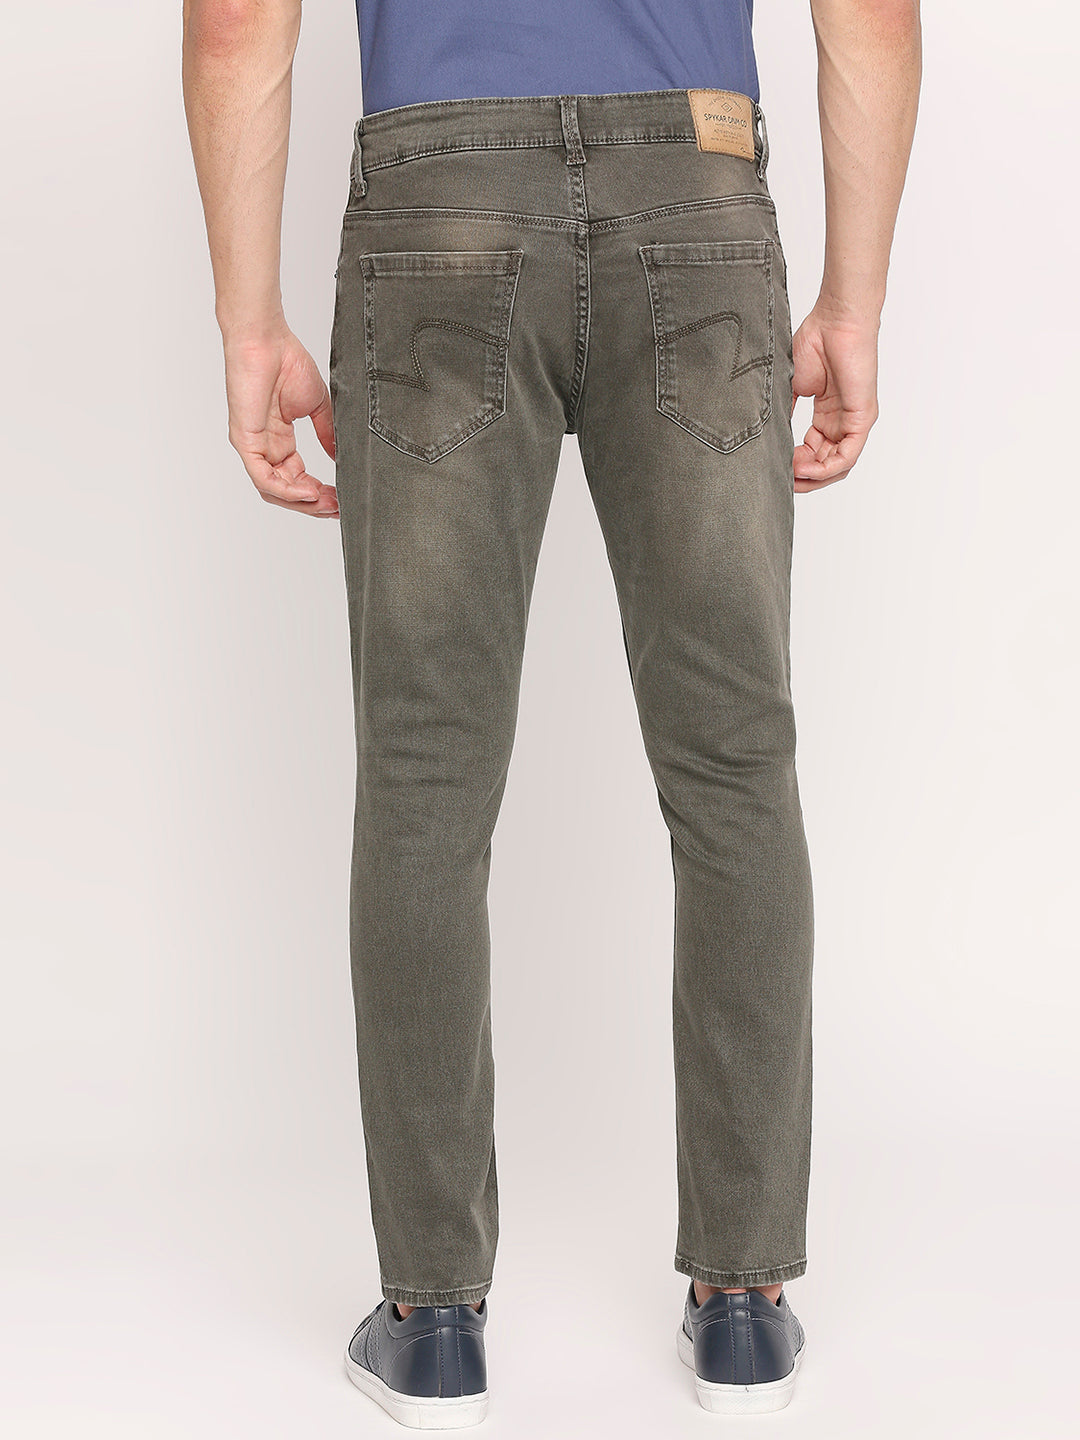 Spykar Light Olive Cotton Slim Fit Tapered Length Jeans For Men (Kano)